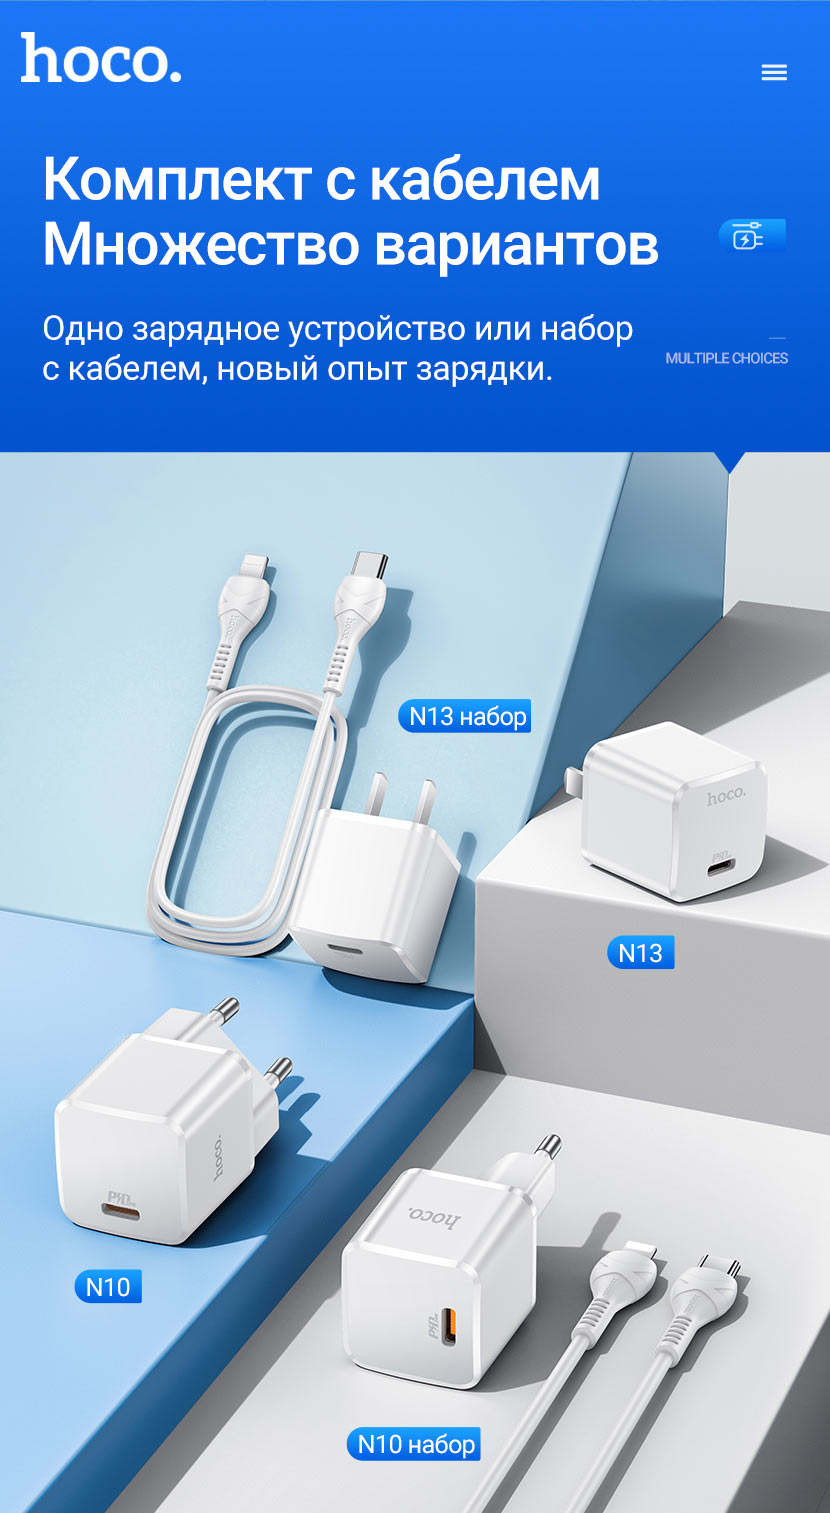 hoco news n10 n13 starter single port pd20w wall charger set ru